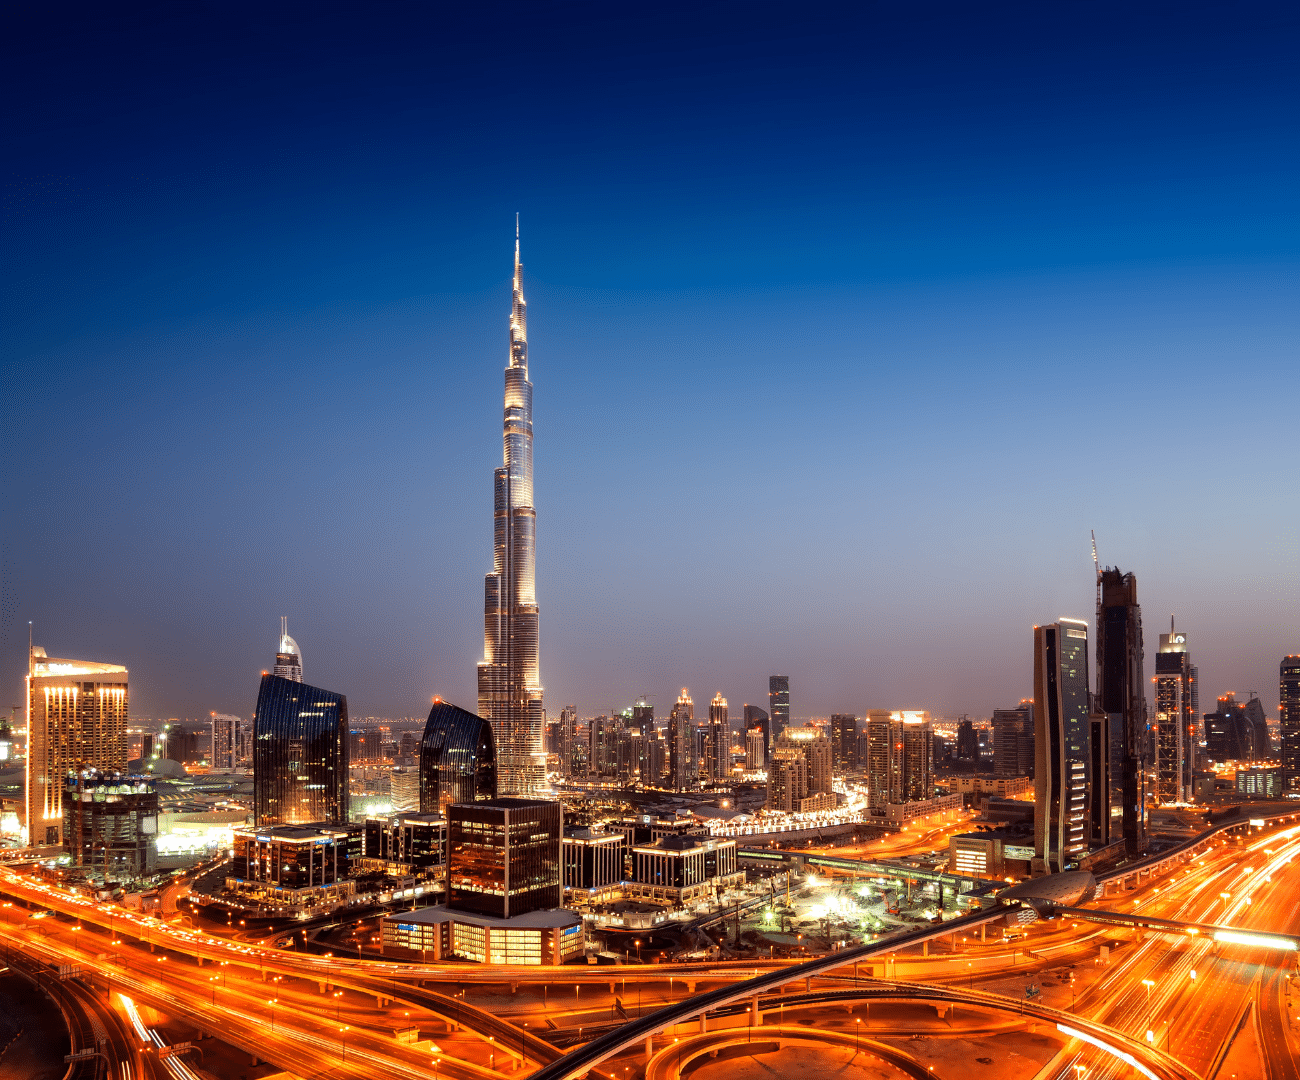 Dubai tour package includes Burj khalifa